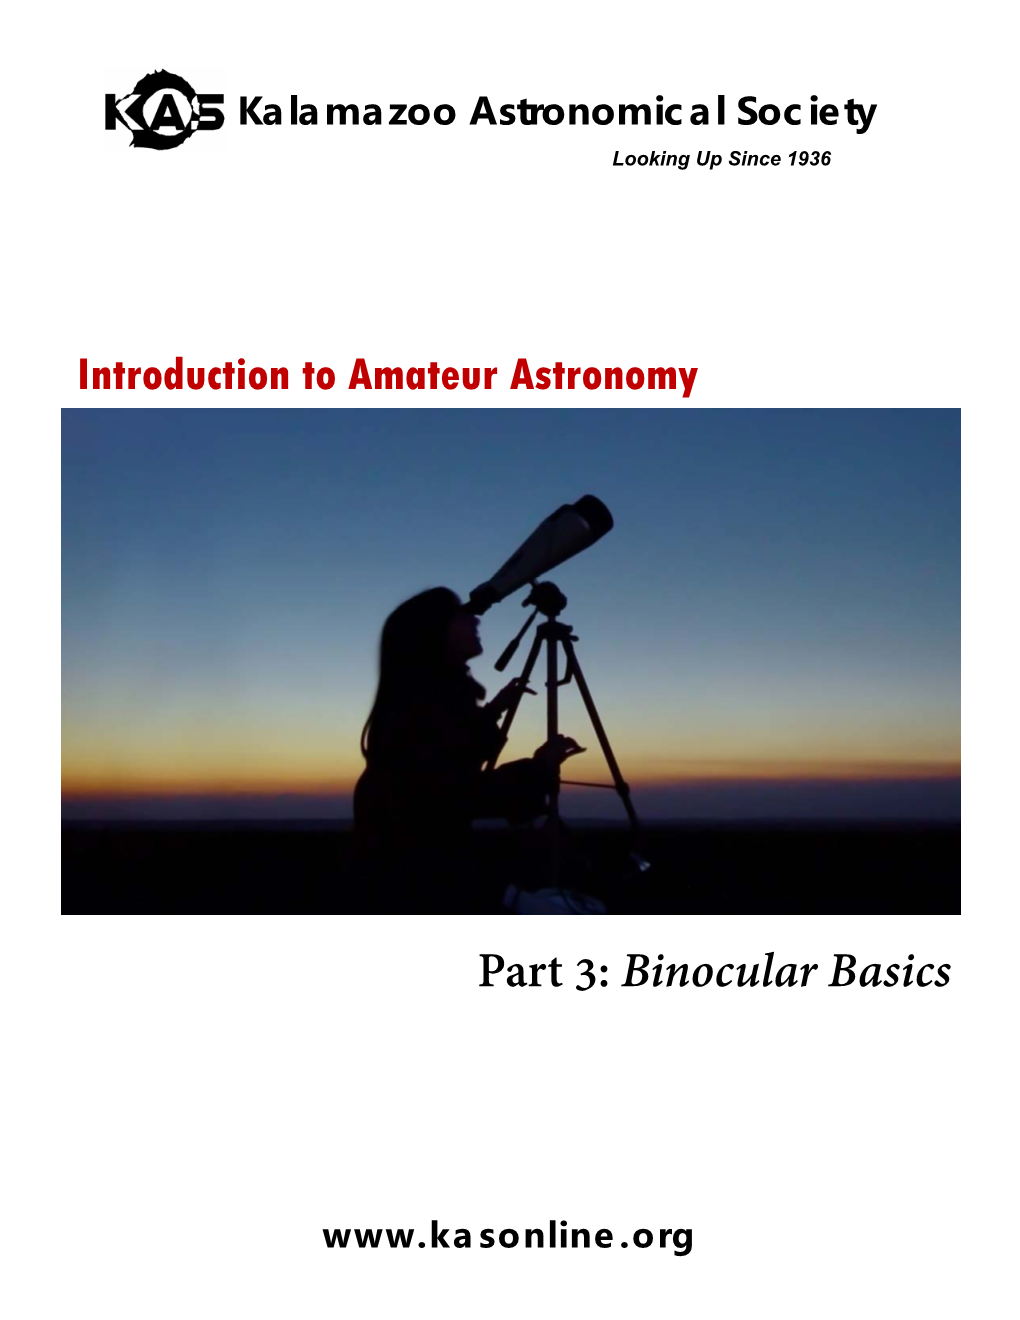 Part 3: Binocular Basics